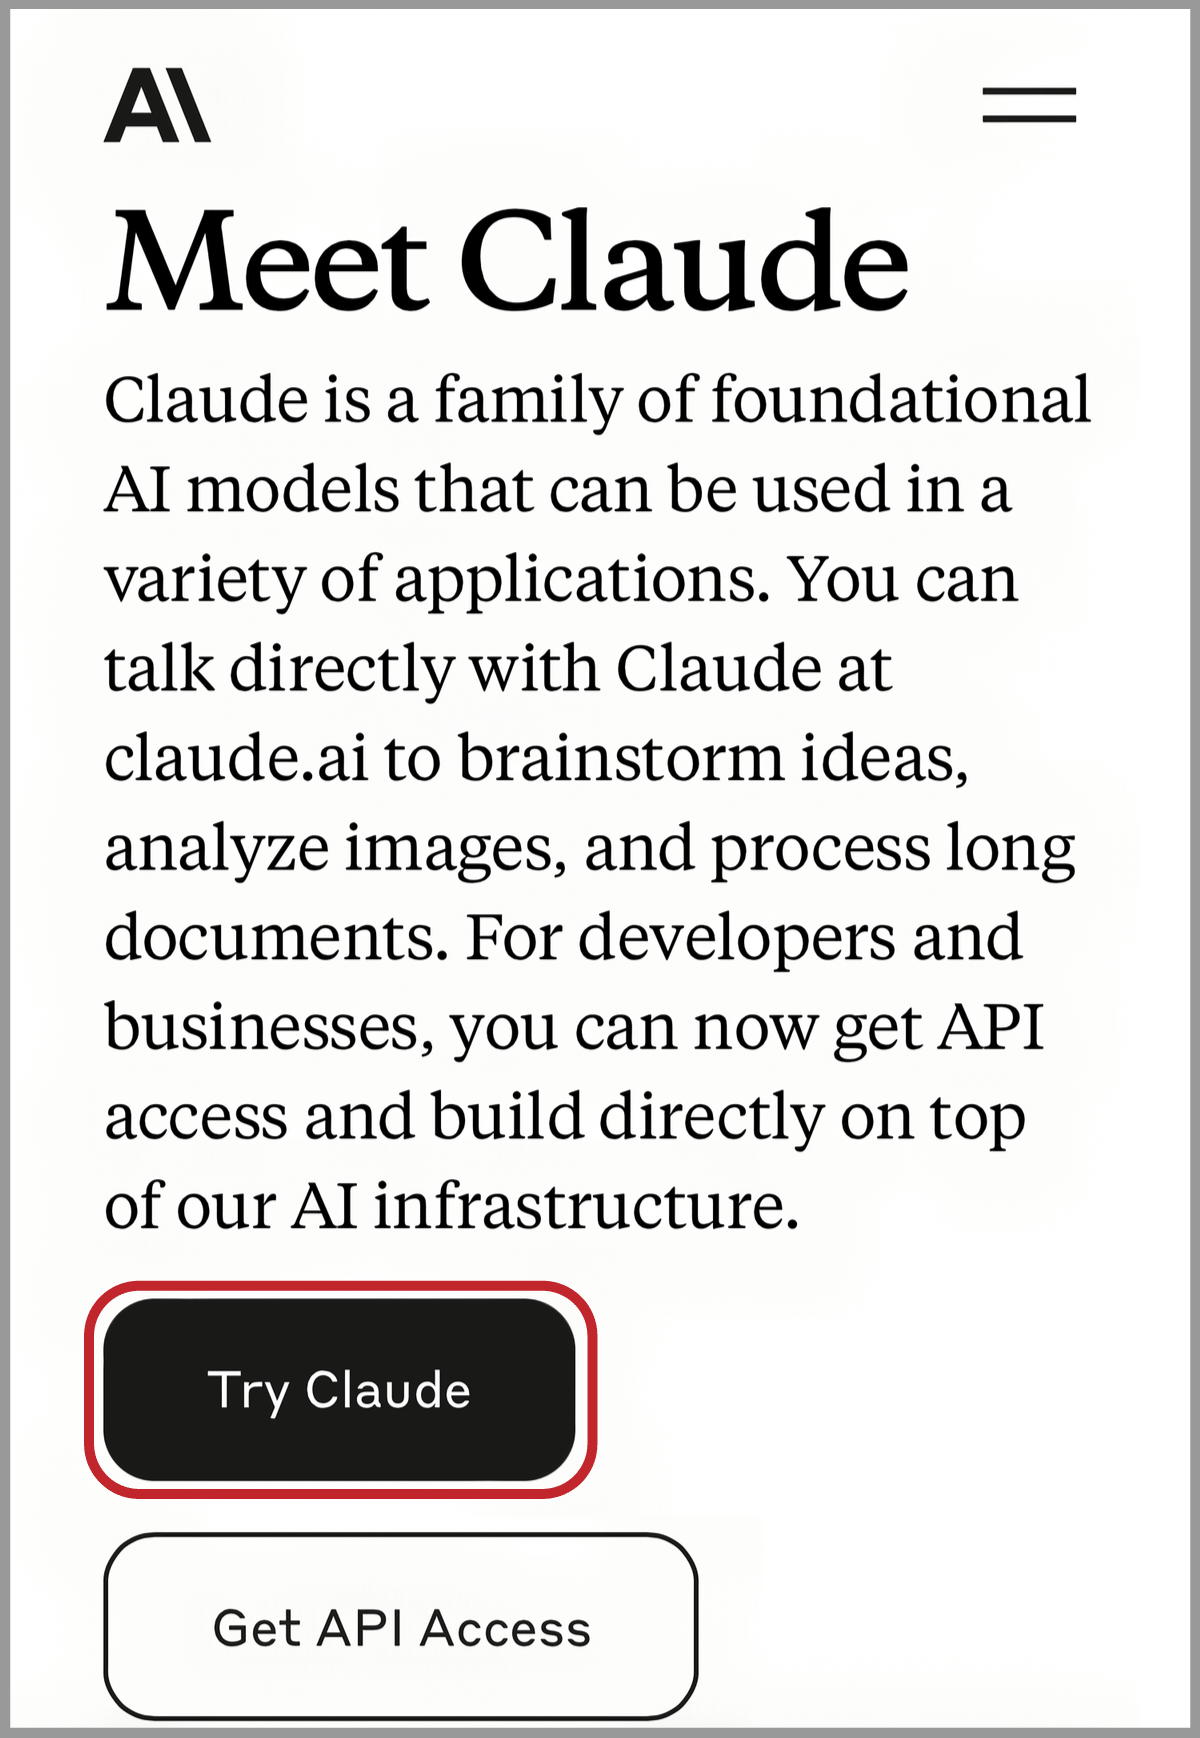 「Try Claude」の位置を示すスクリーンショット